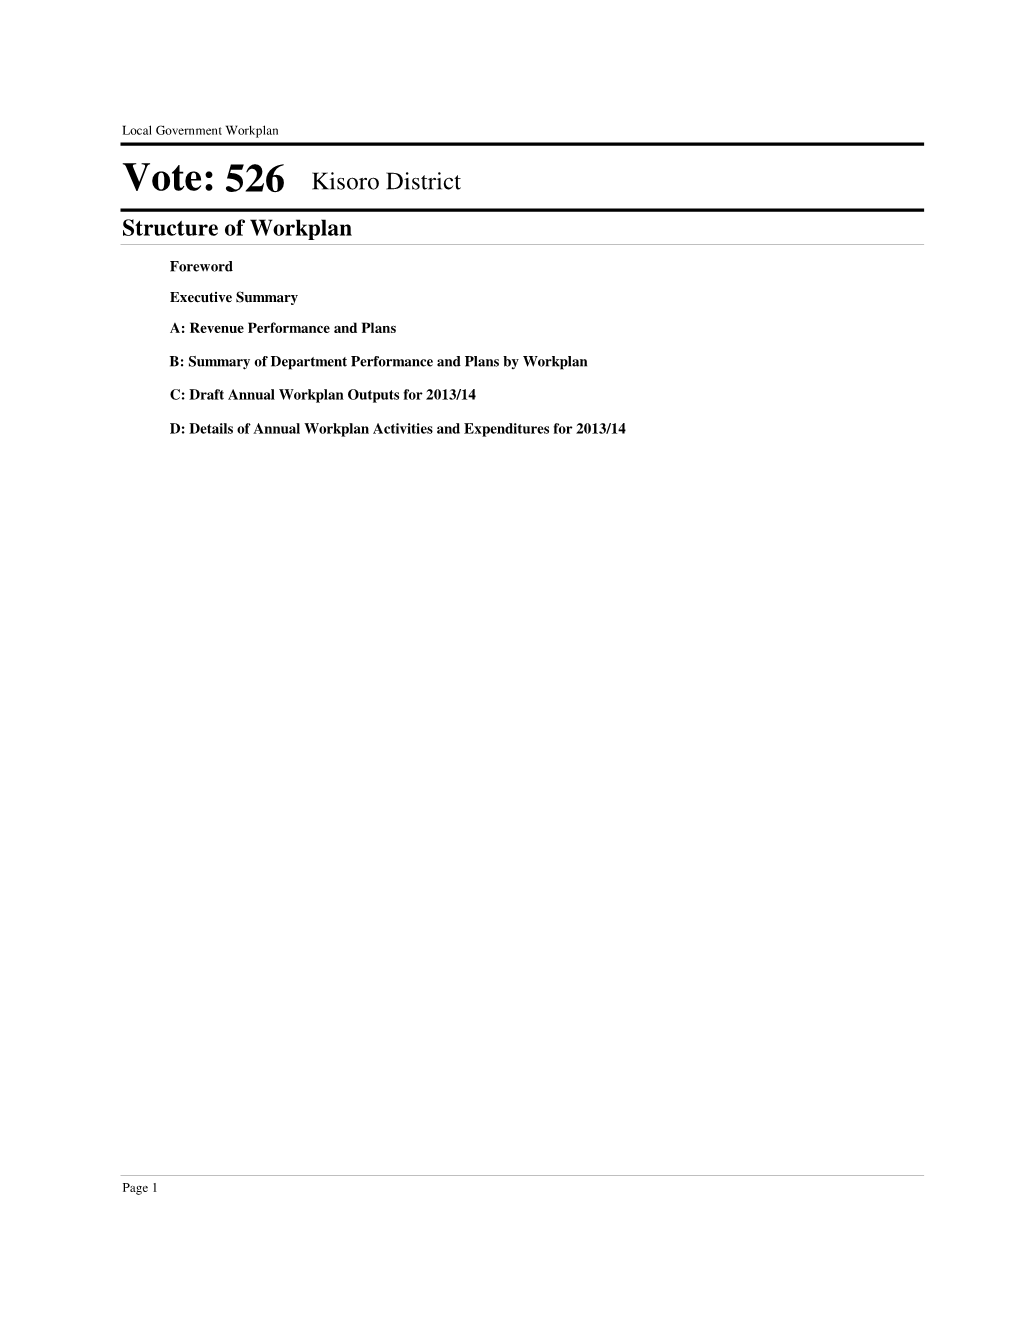 Vote: 526 Kisoro District Structure of Workplan